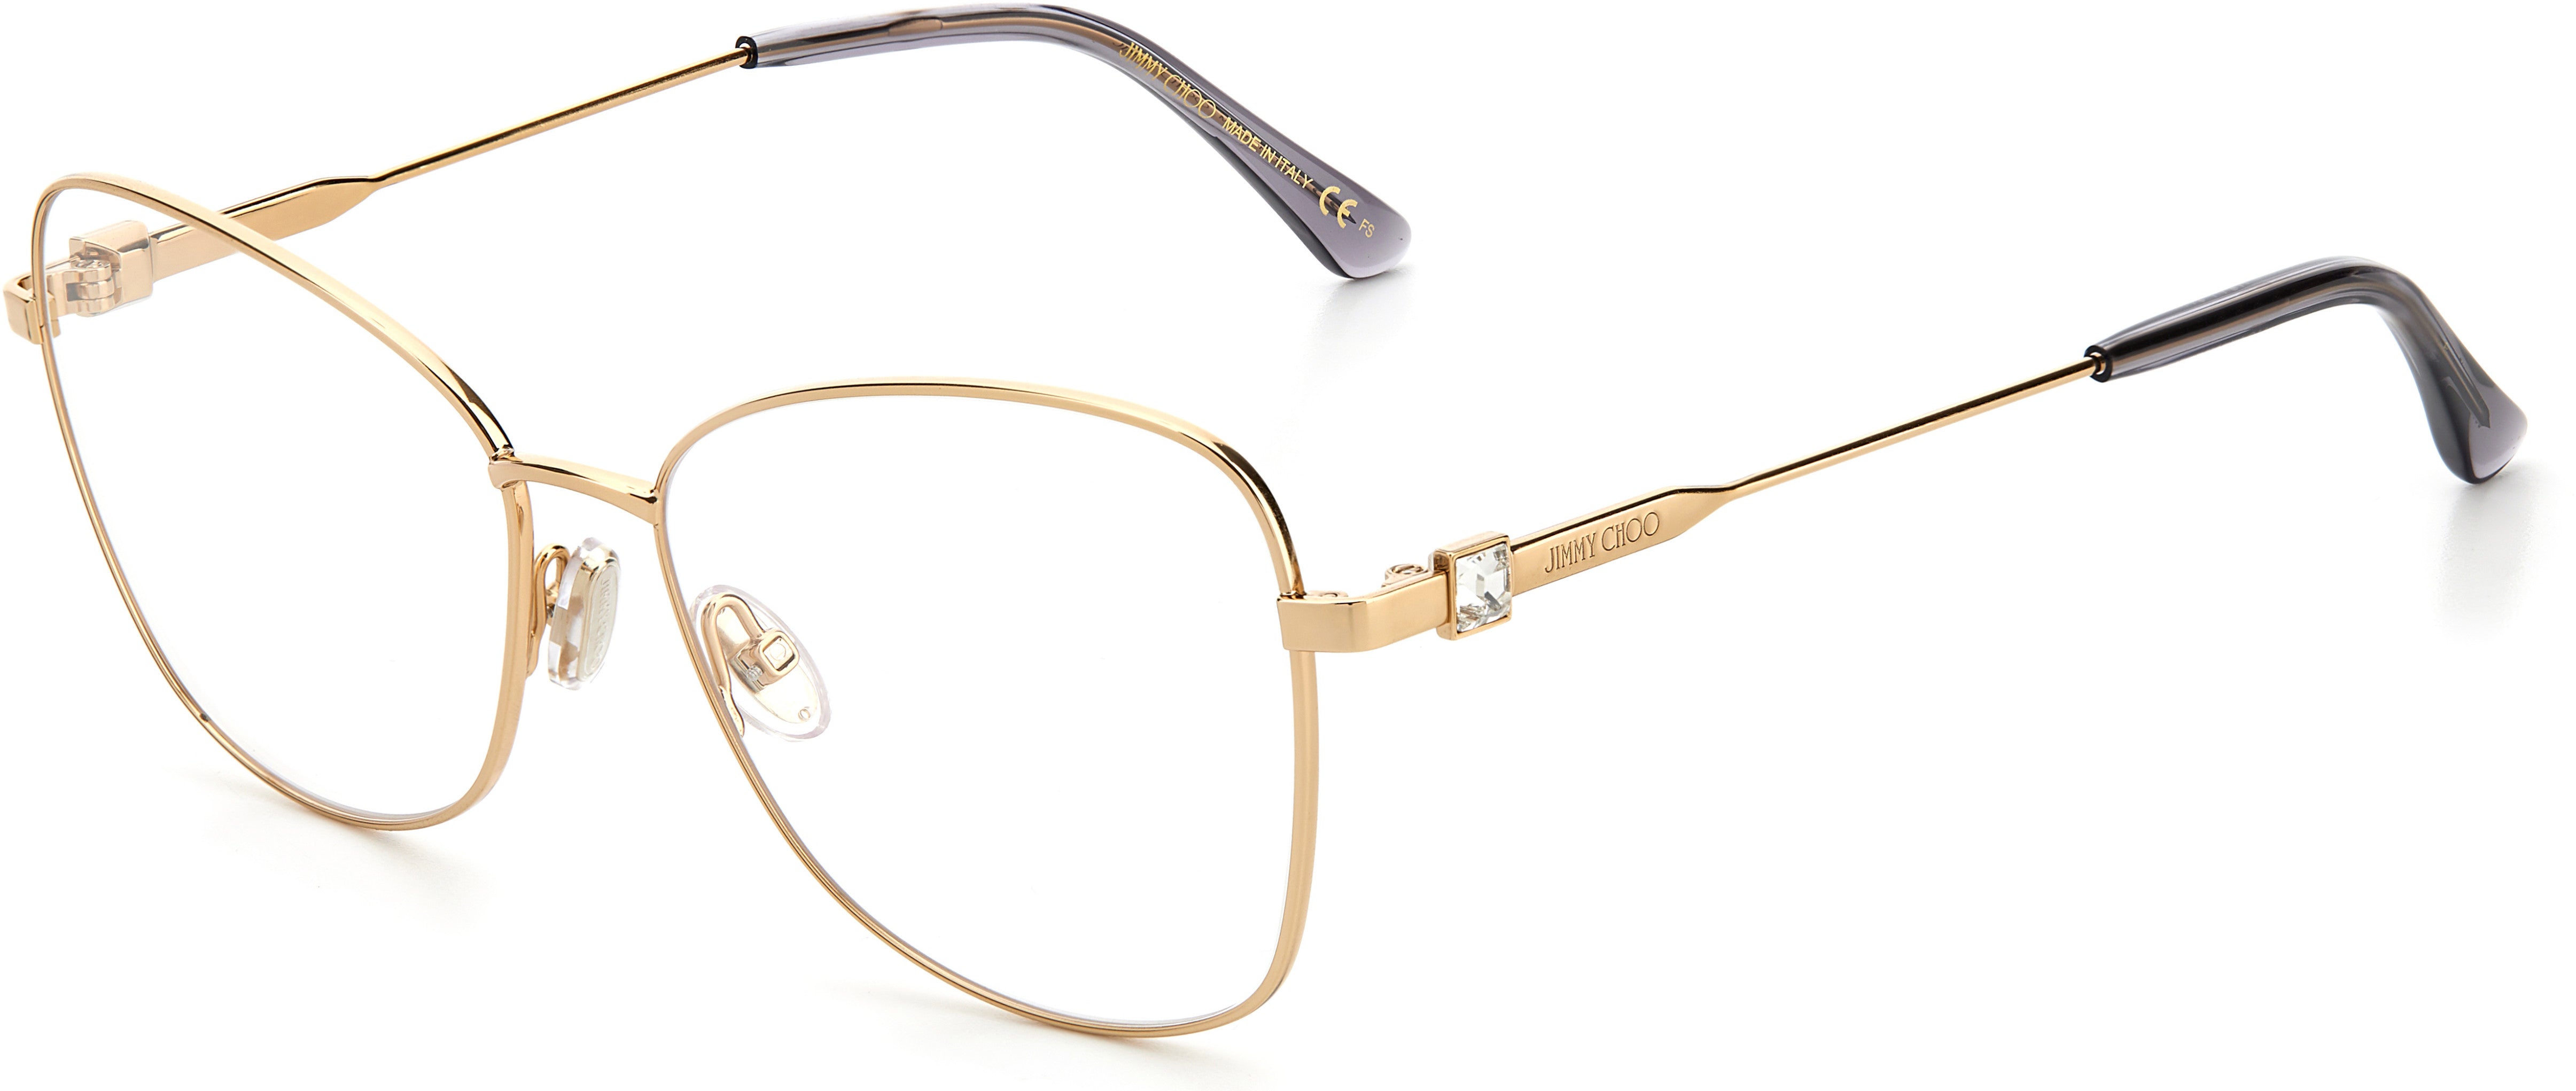  Jimmy Choo 304 Oval Modified Eyeglasses 0000-0000  Rose Gold (00 Demo Lens)